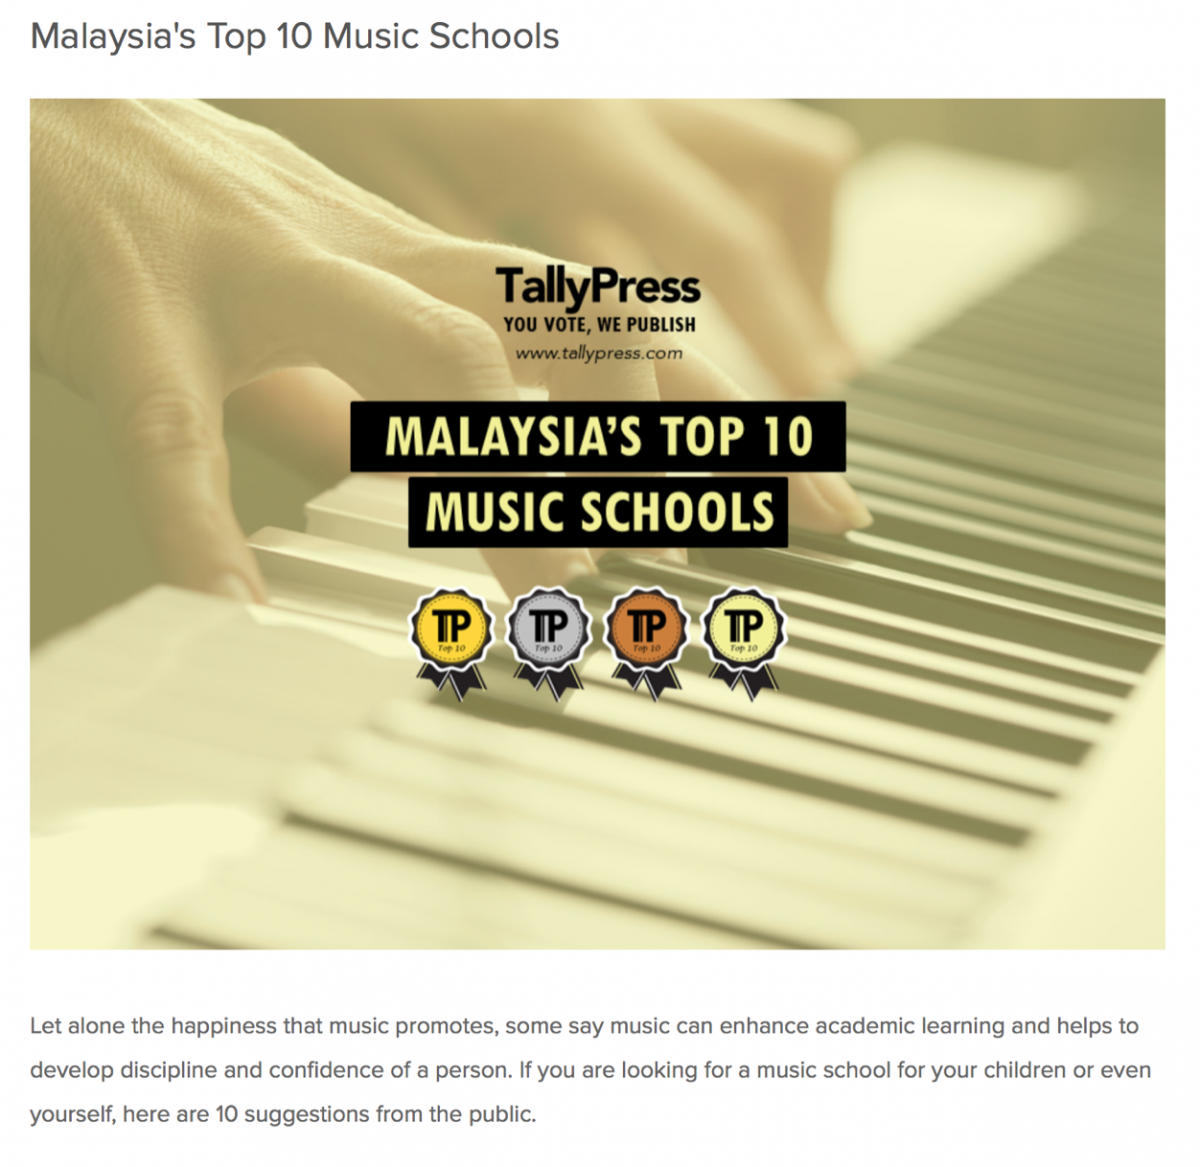 MALAYSIA’S TOP 10 MUSIC SCHOOLS